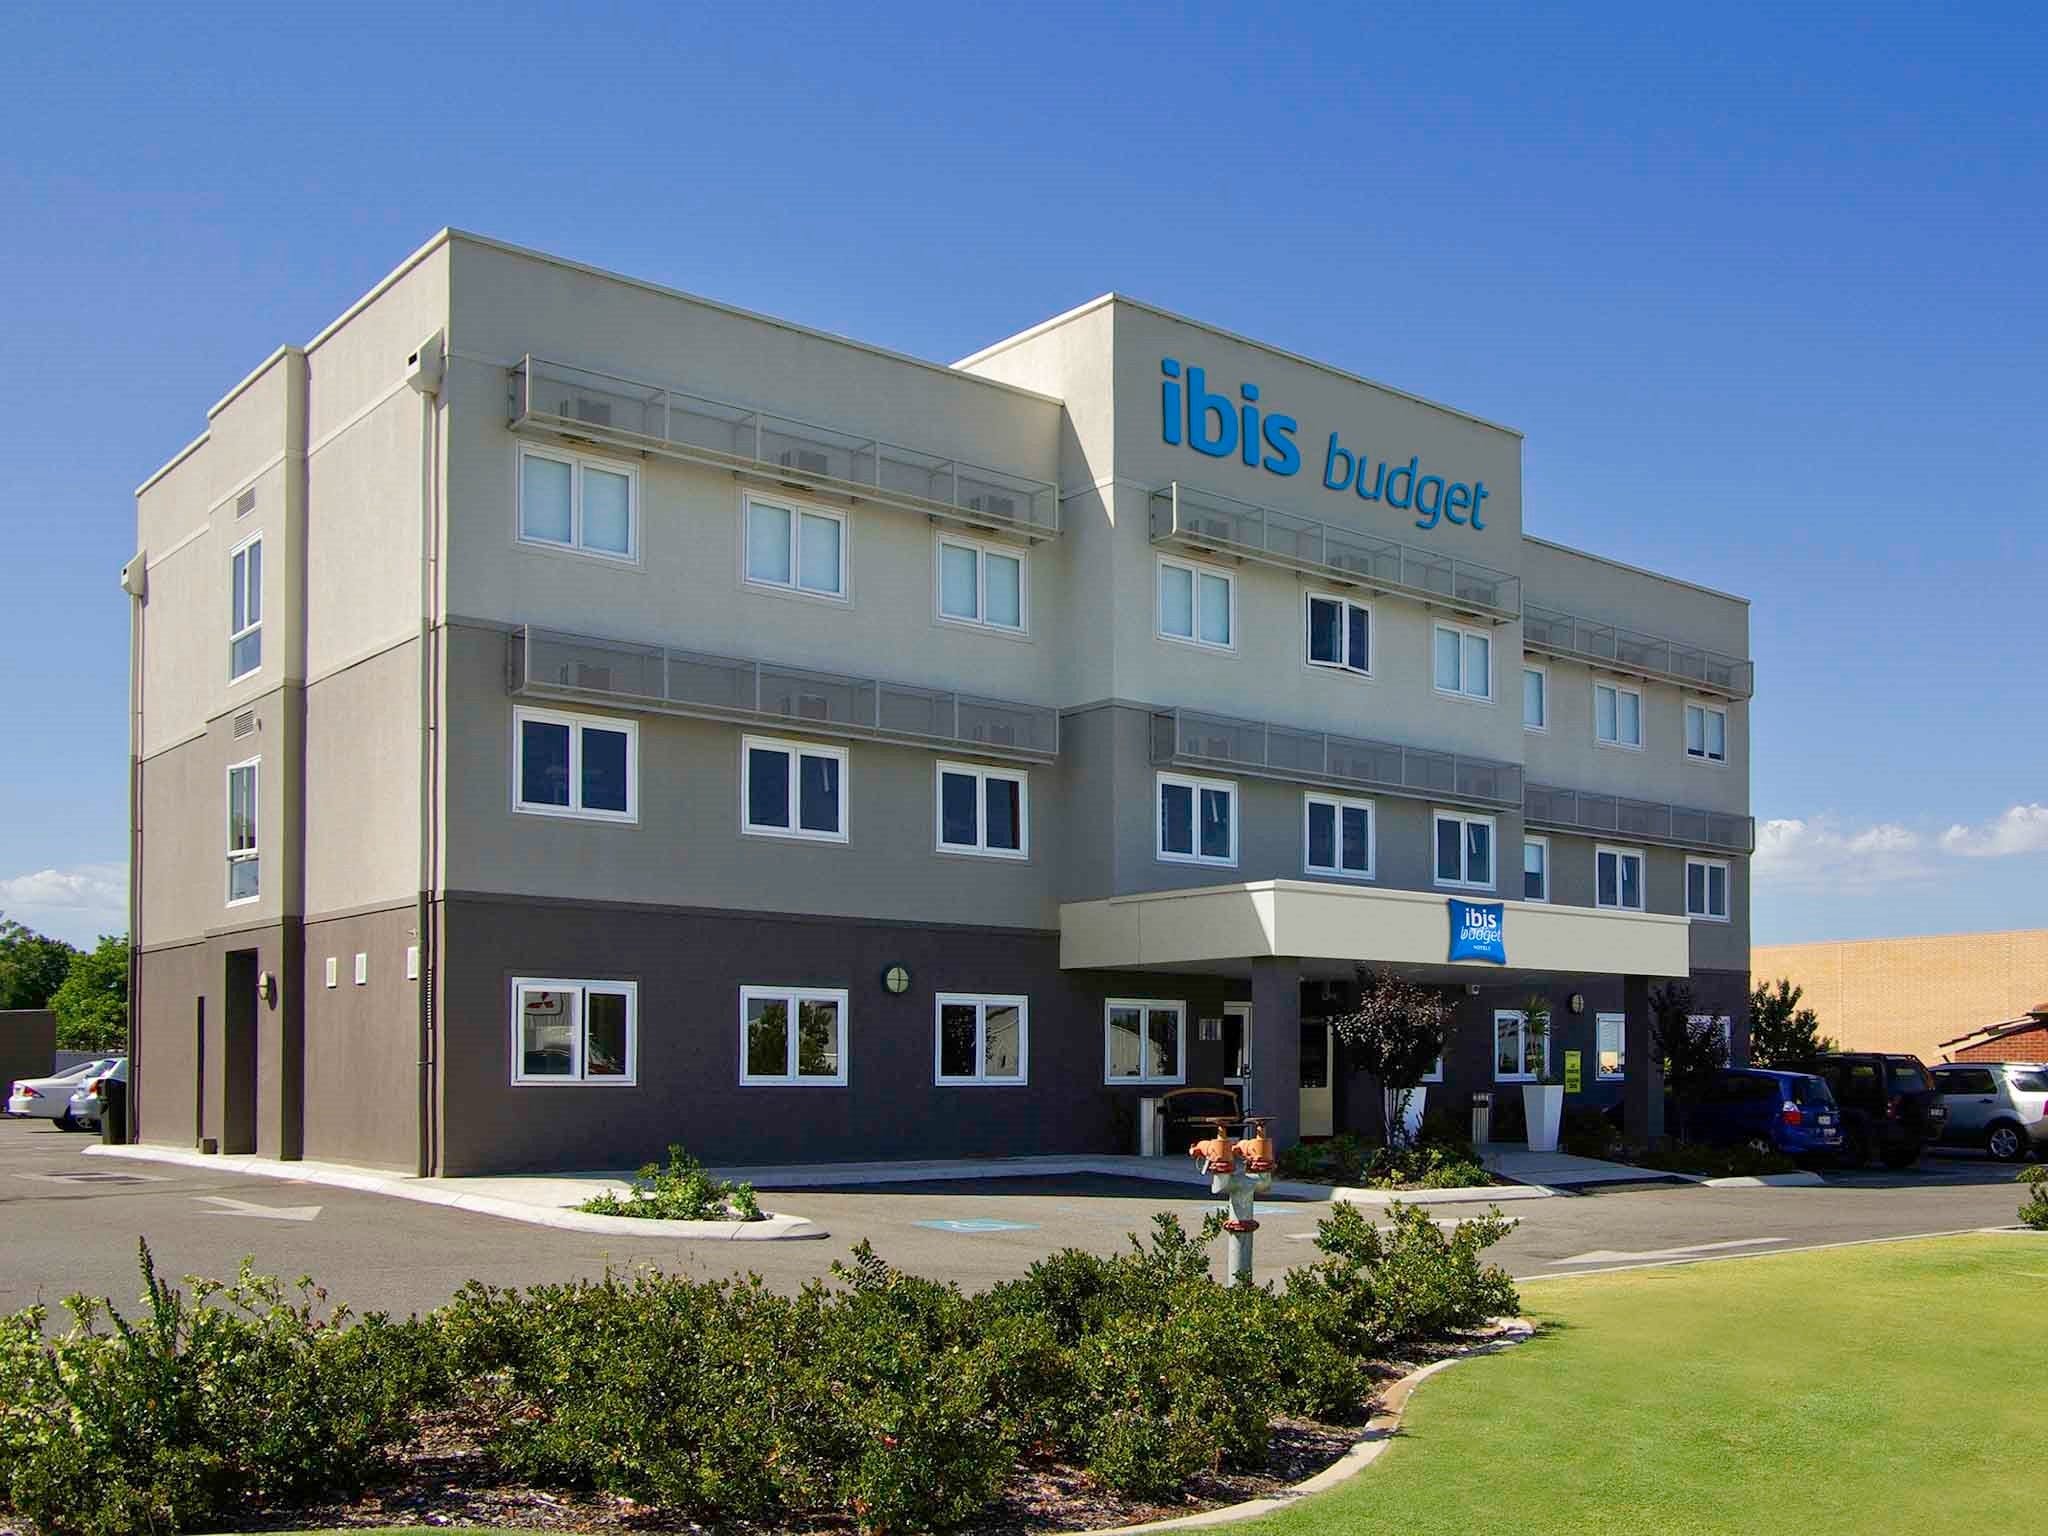 Ibis Budget - Perth Airport - Accommodation Australia